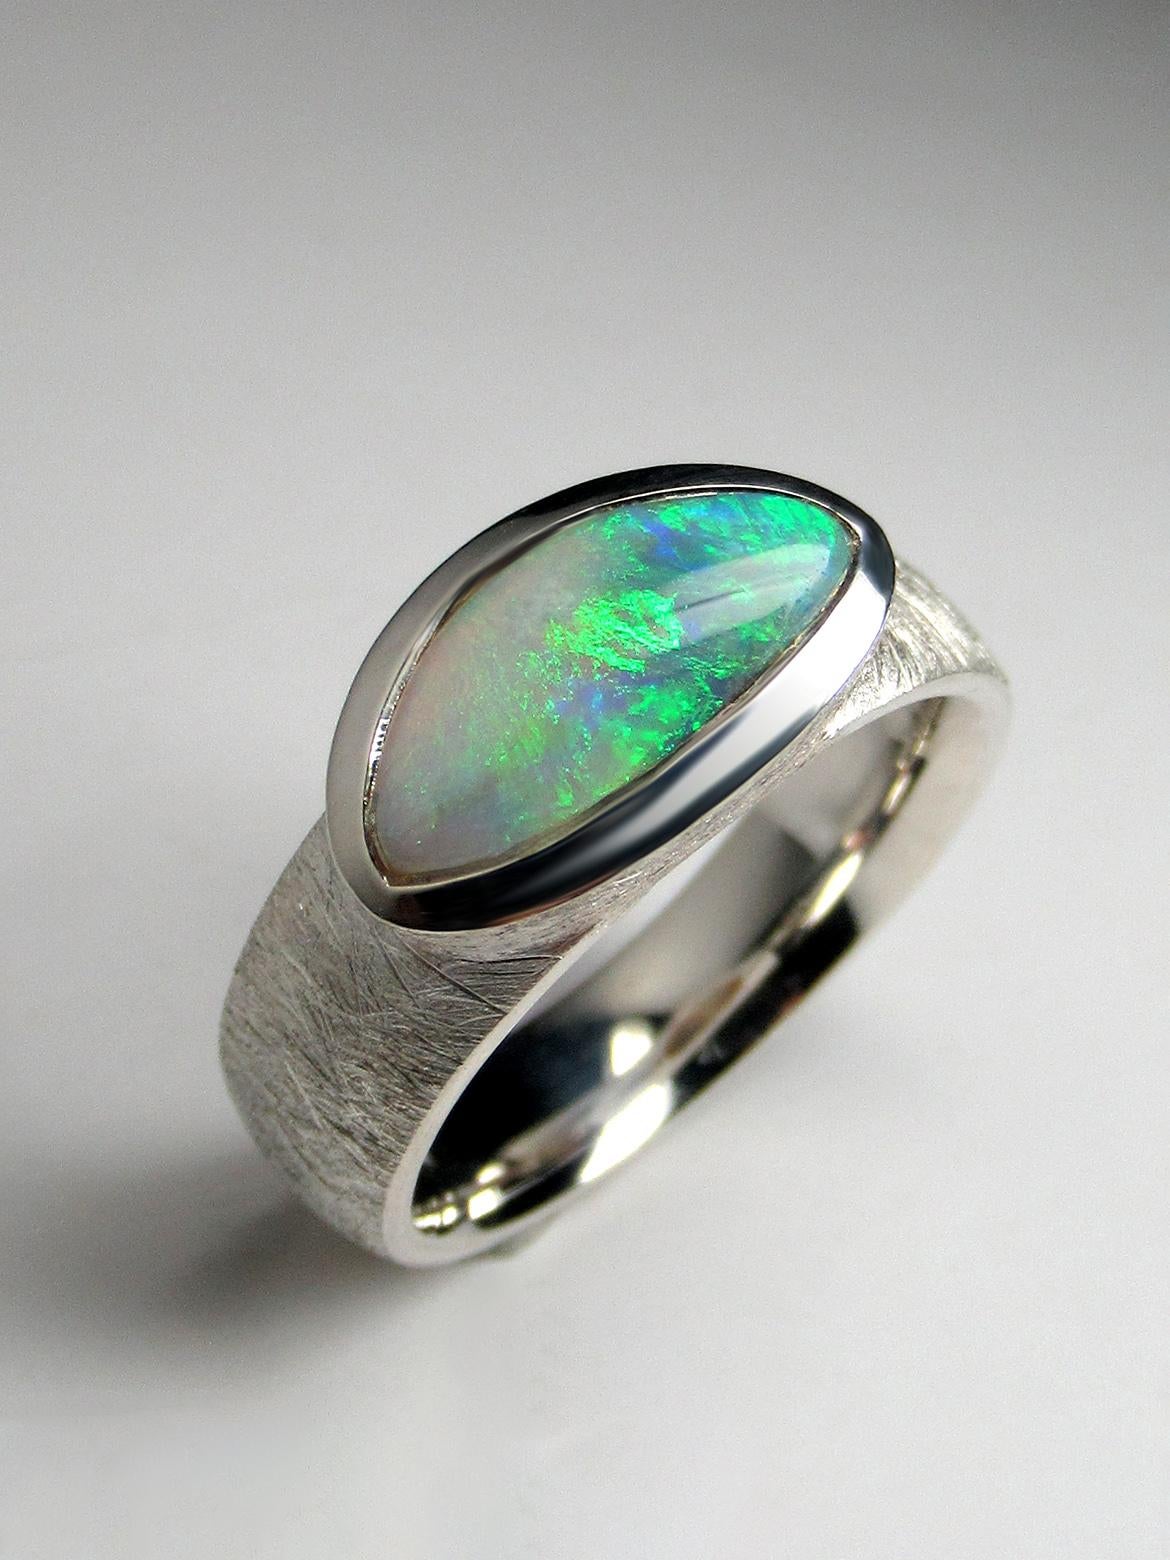 Silver ring with natural precious green Opal
Opal origin - Australia
gemstone measurements 0.24 х 055 in / 6 х 14 mm
ring weight - 7.3 grams
ring size - 7 3/4 US